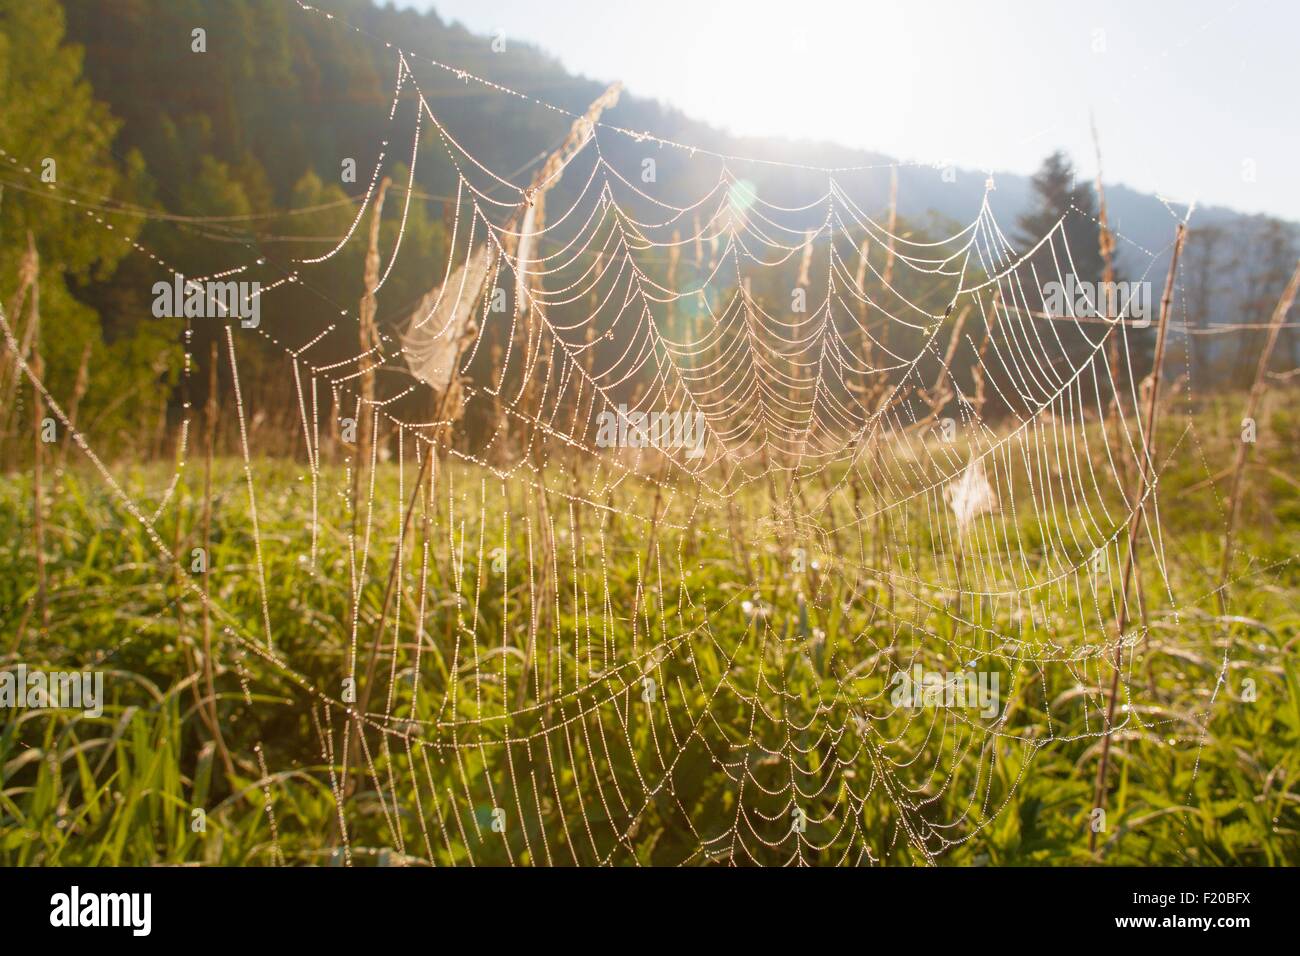 Spinnennetz im Feld, Nahaufnahme Stockfoto